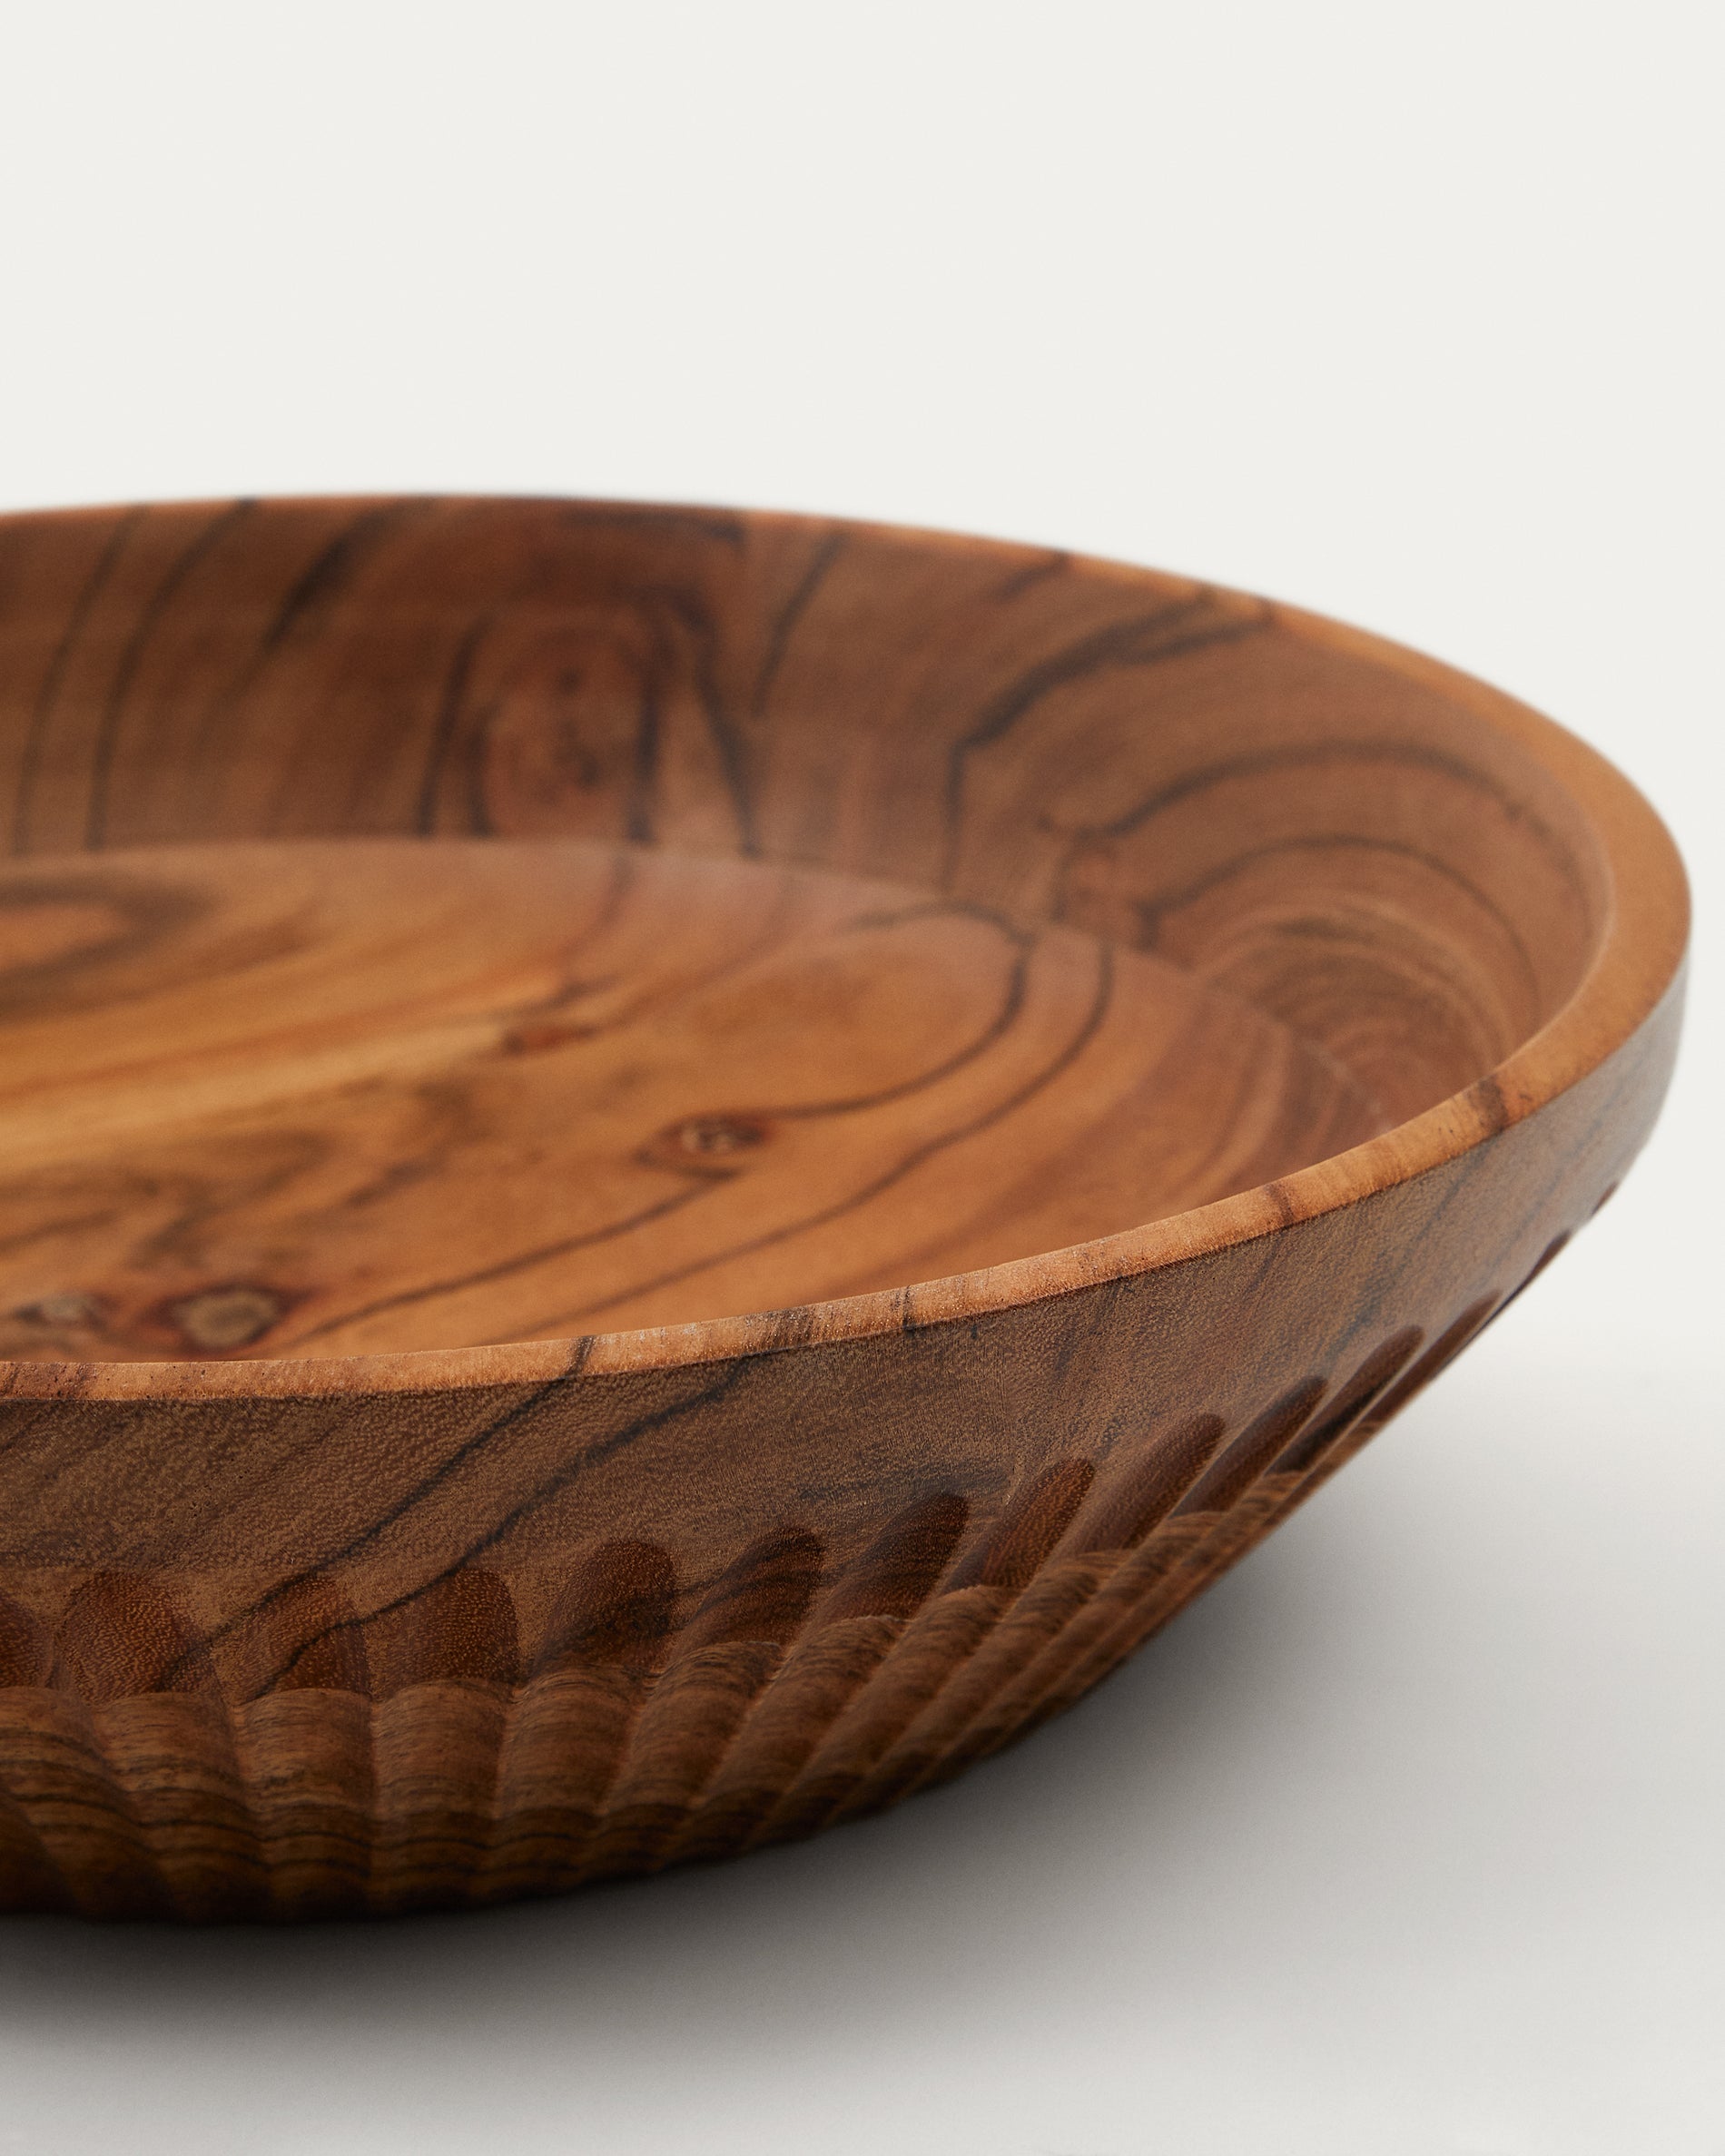 Silsia acacia wood bowl